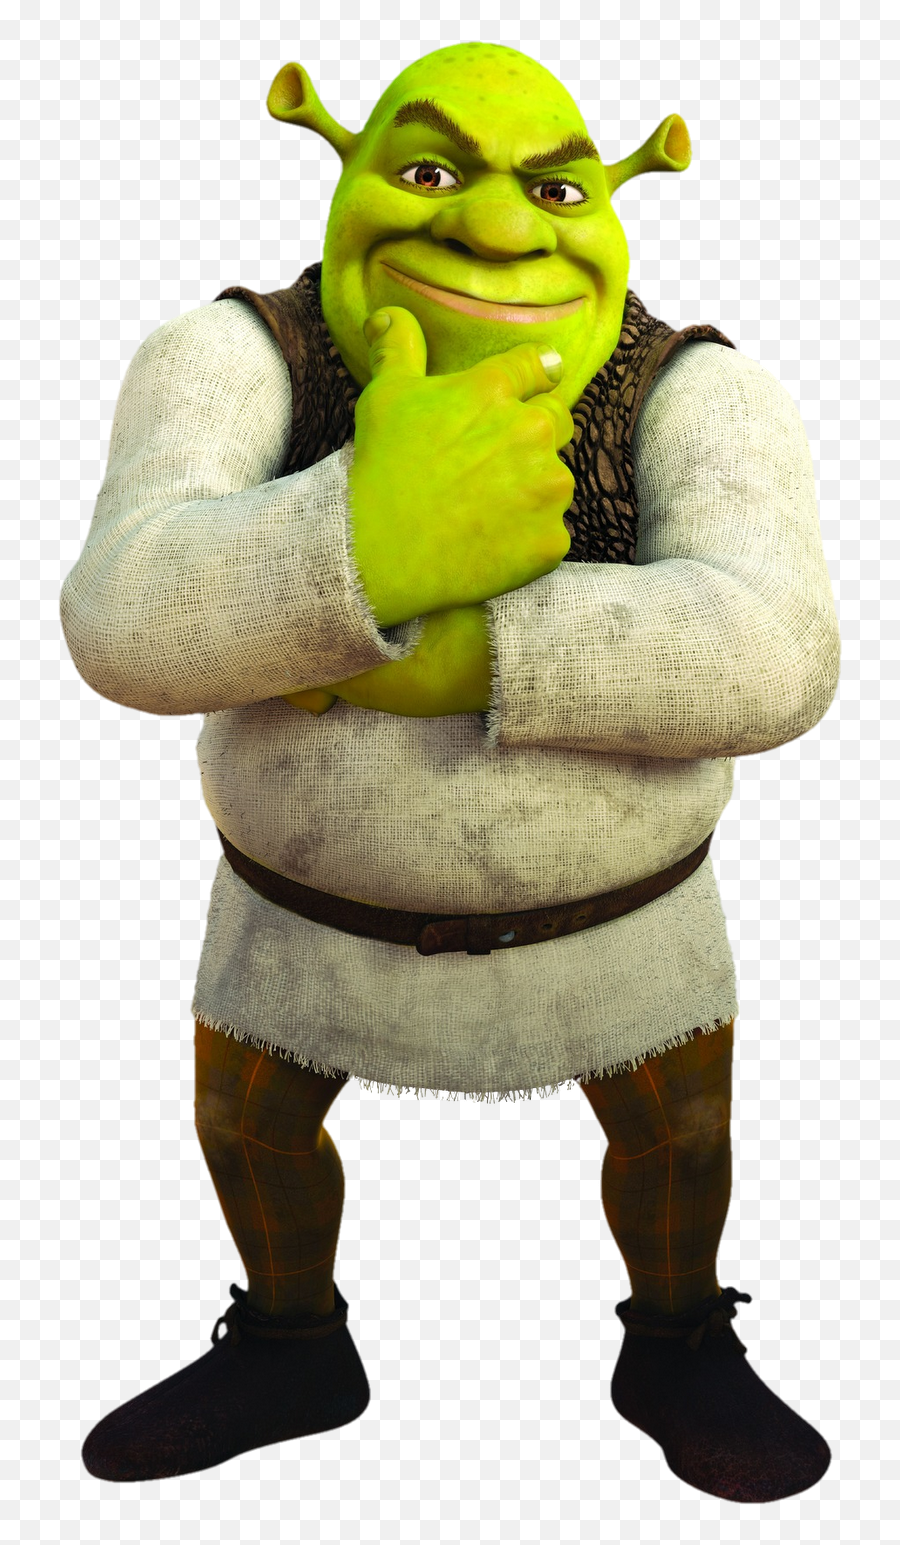 Download Shrek Thinking Png Image For Free - Transparent Background Shrek Png Emoji,Thinking Png